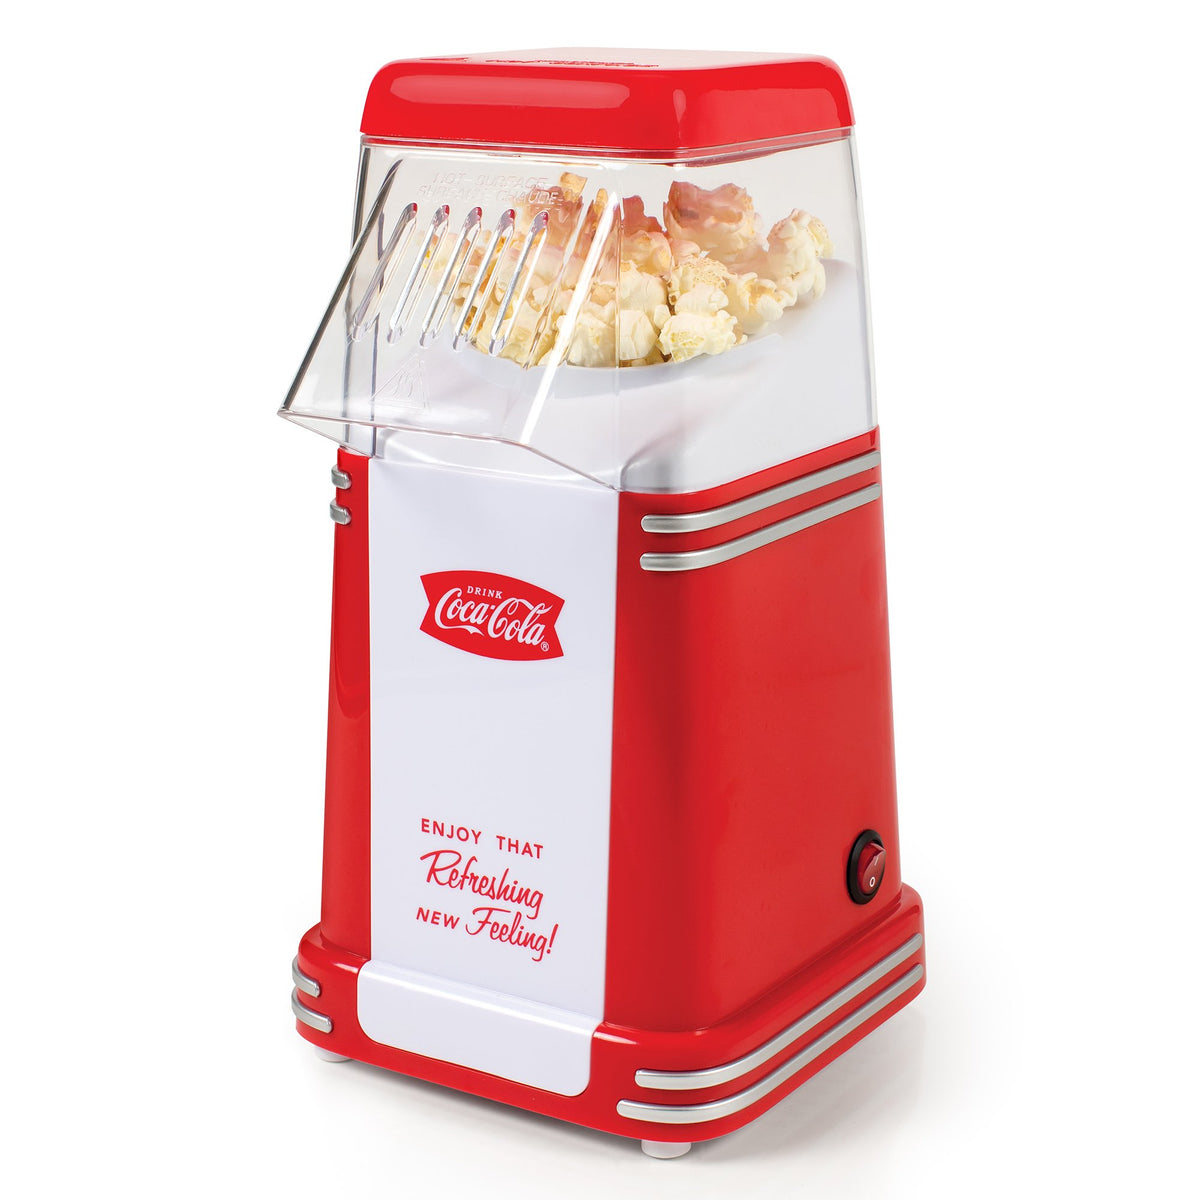 EGOFINE Popcorn Poppers Machine, Home Electric Popcorn Maker Hot